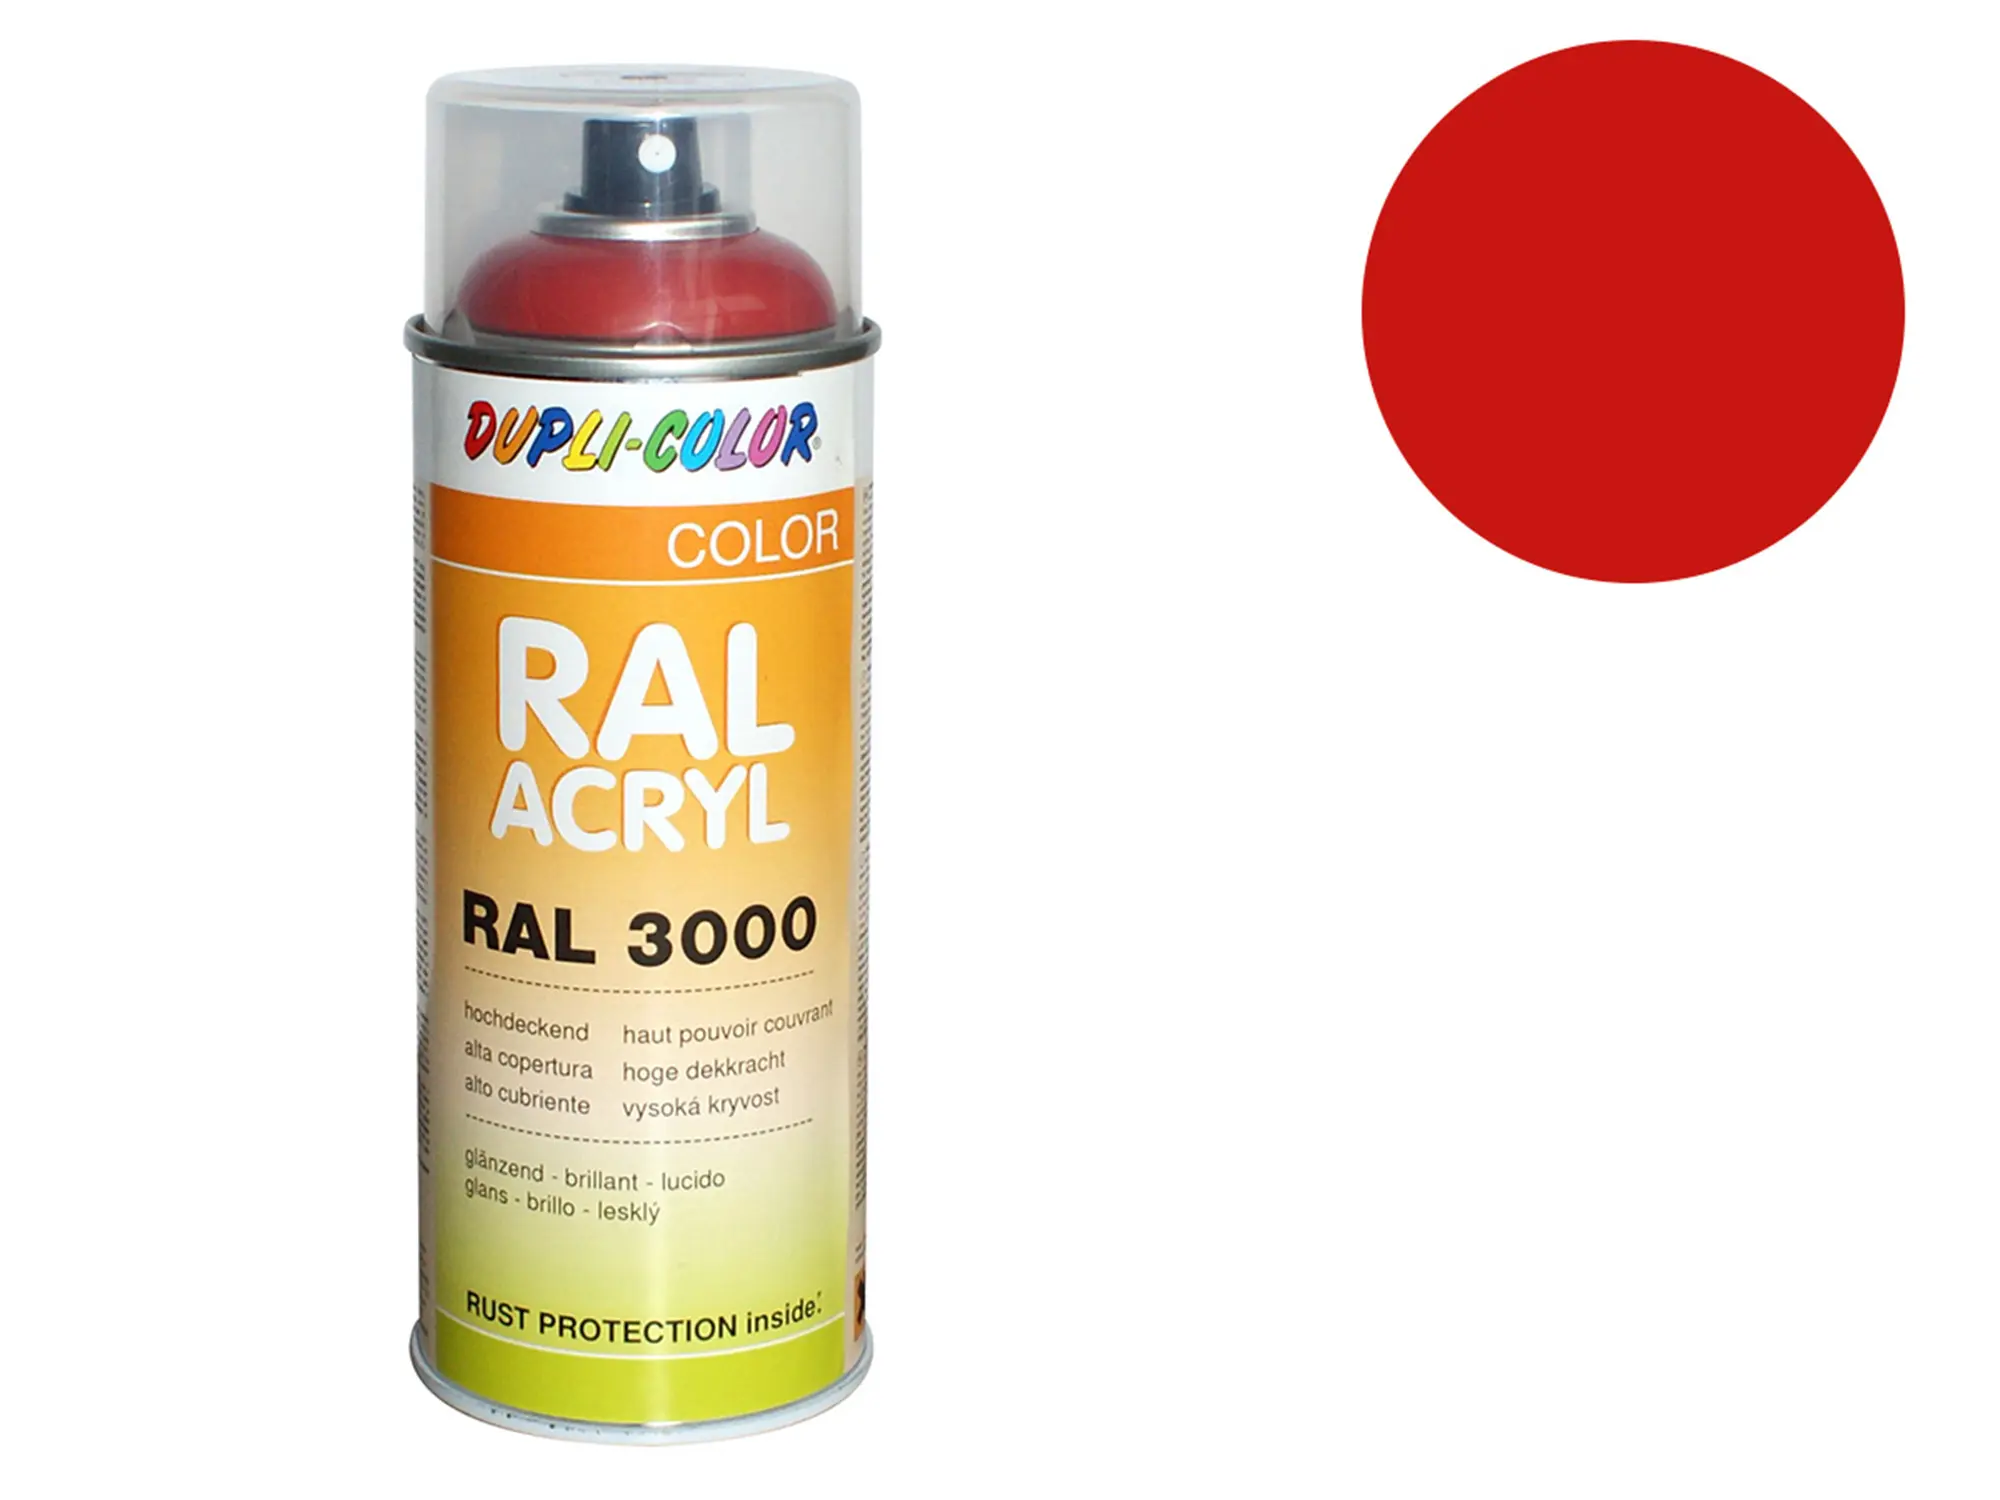 Dupli-Color Acryl-Spray RAL 3020 verkehrsrot, glänzend - 400 ml, Art.-Nr.: 10064774 - Bild 1